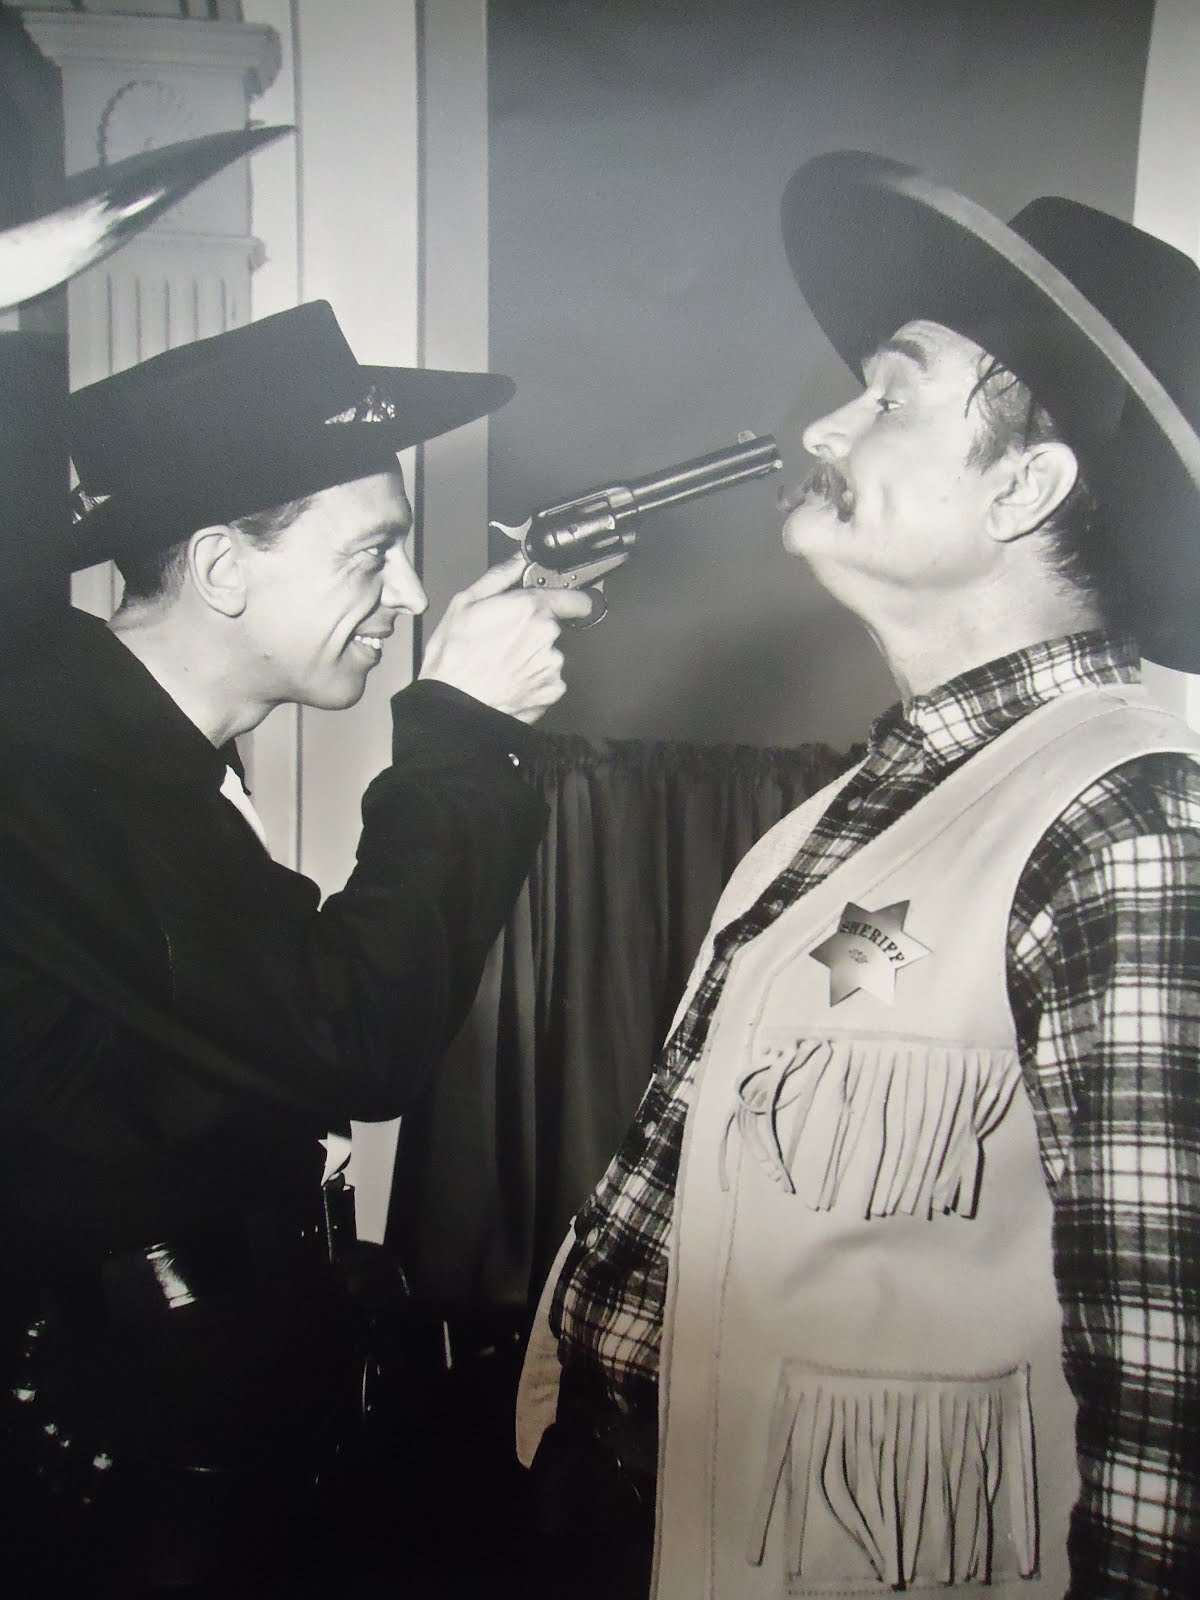 Deadeye and the Gunslinger - The Red Skelton Show, season 11 - with Don Knotts